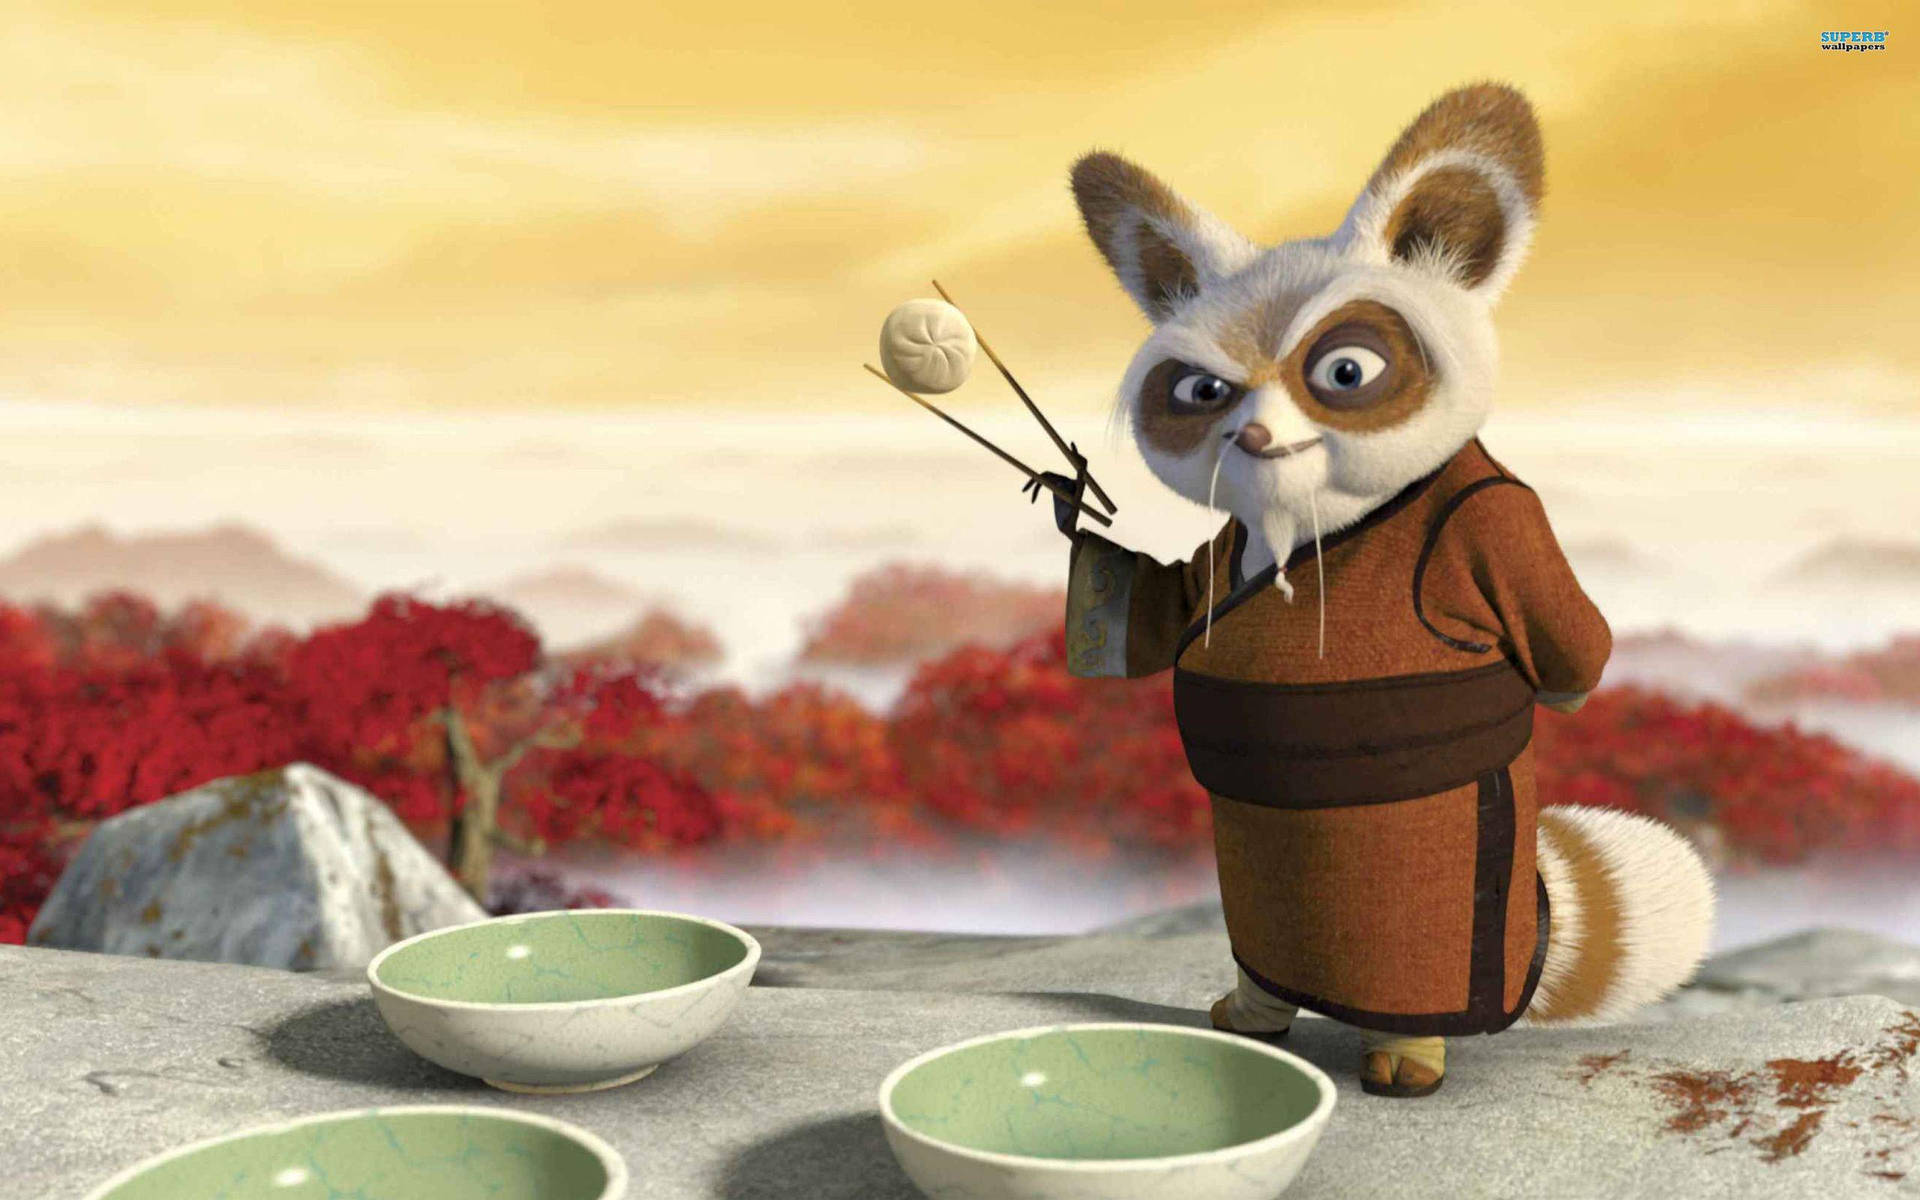 Shifu From Kung Fu Panda With Chopsticks Wallpaper